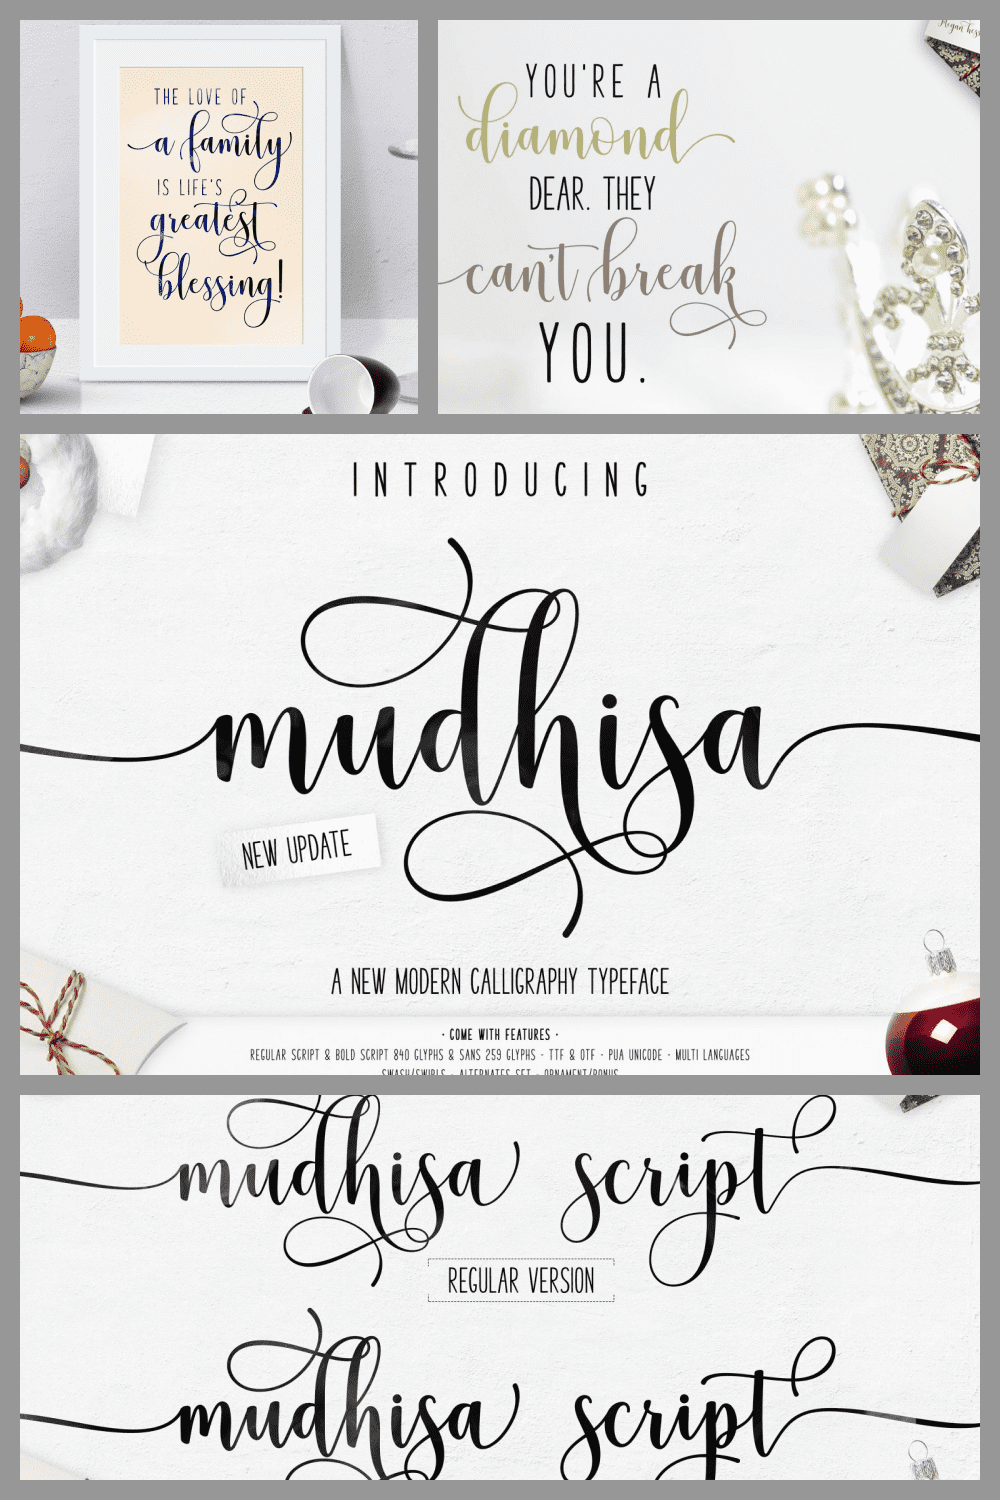 Mudhisa Script Handwritten Calligraphy | 4 Versions - MasterBundles - Pinterest Collage Image.